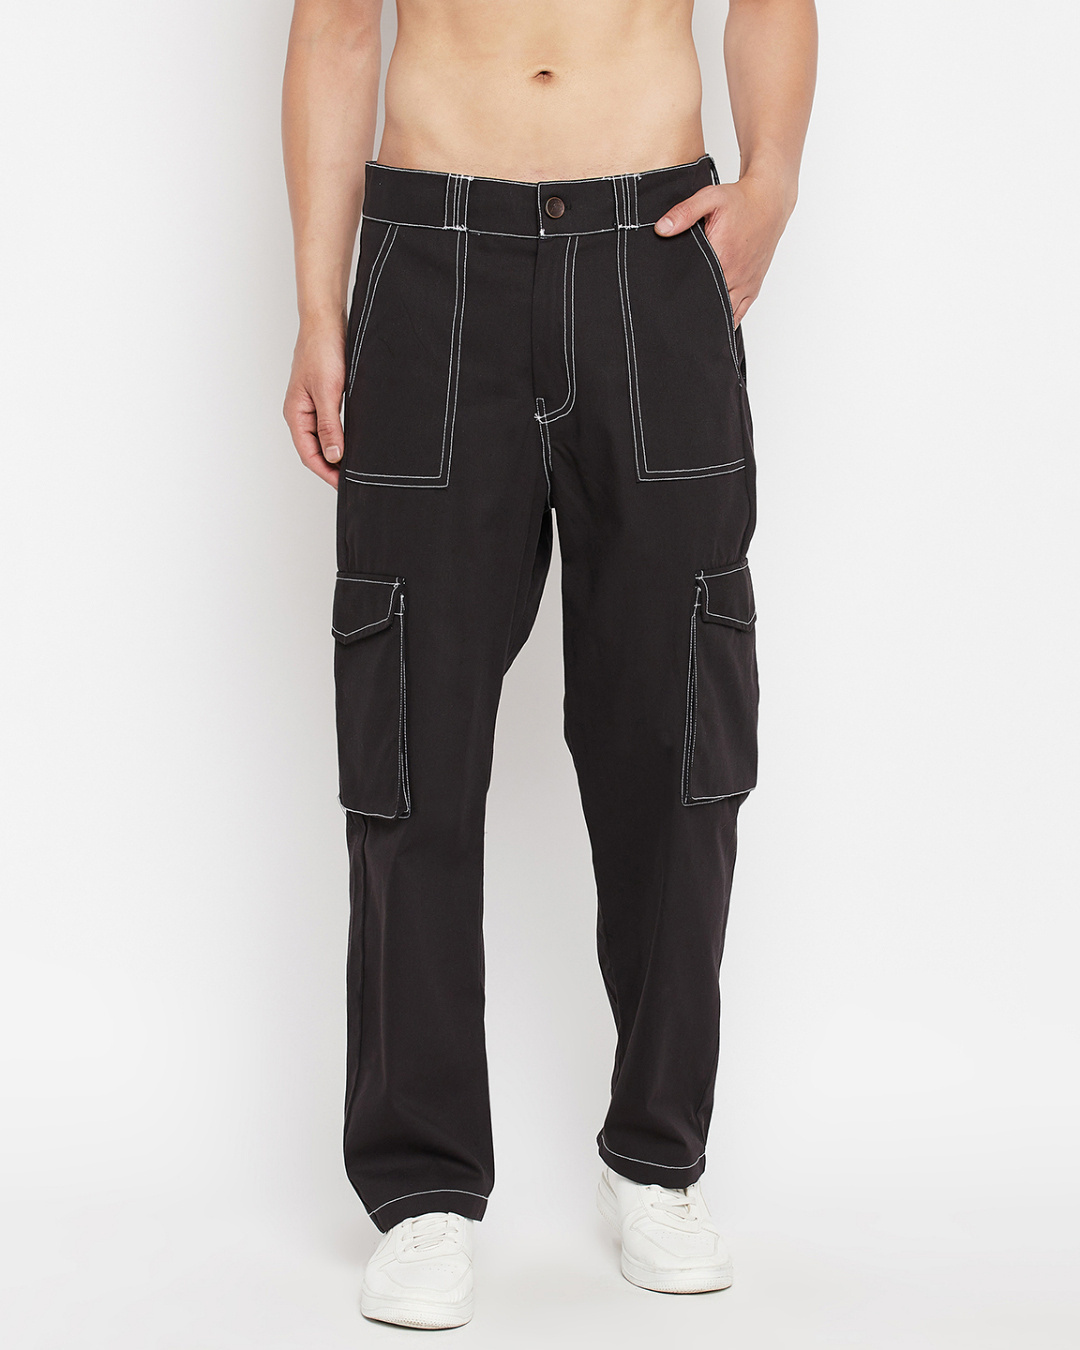 Black Cargo Pants Outfits for Men  Flap Pocket Side Trousers Streetwear  Baggy Jogger Pants  Cargo pants outfit men Mens outfits Black cargo pants